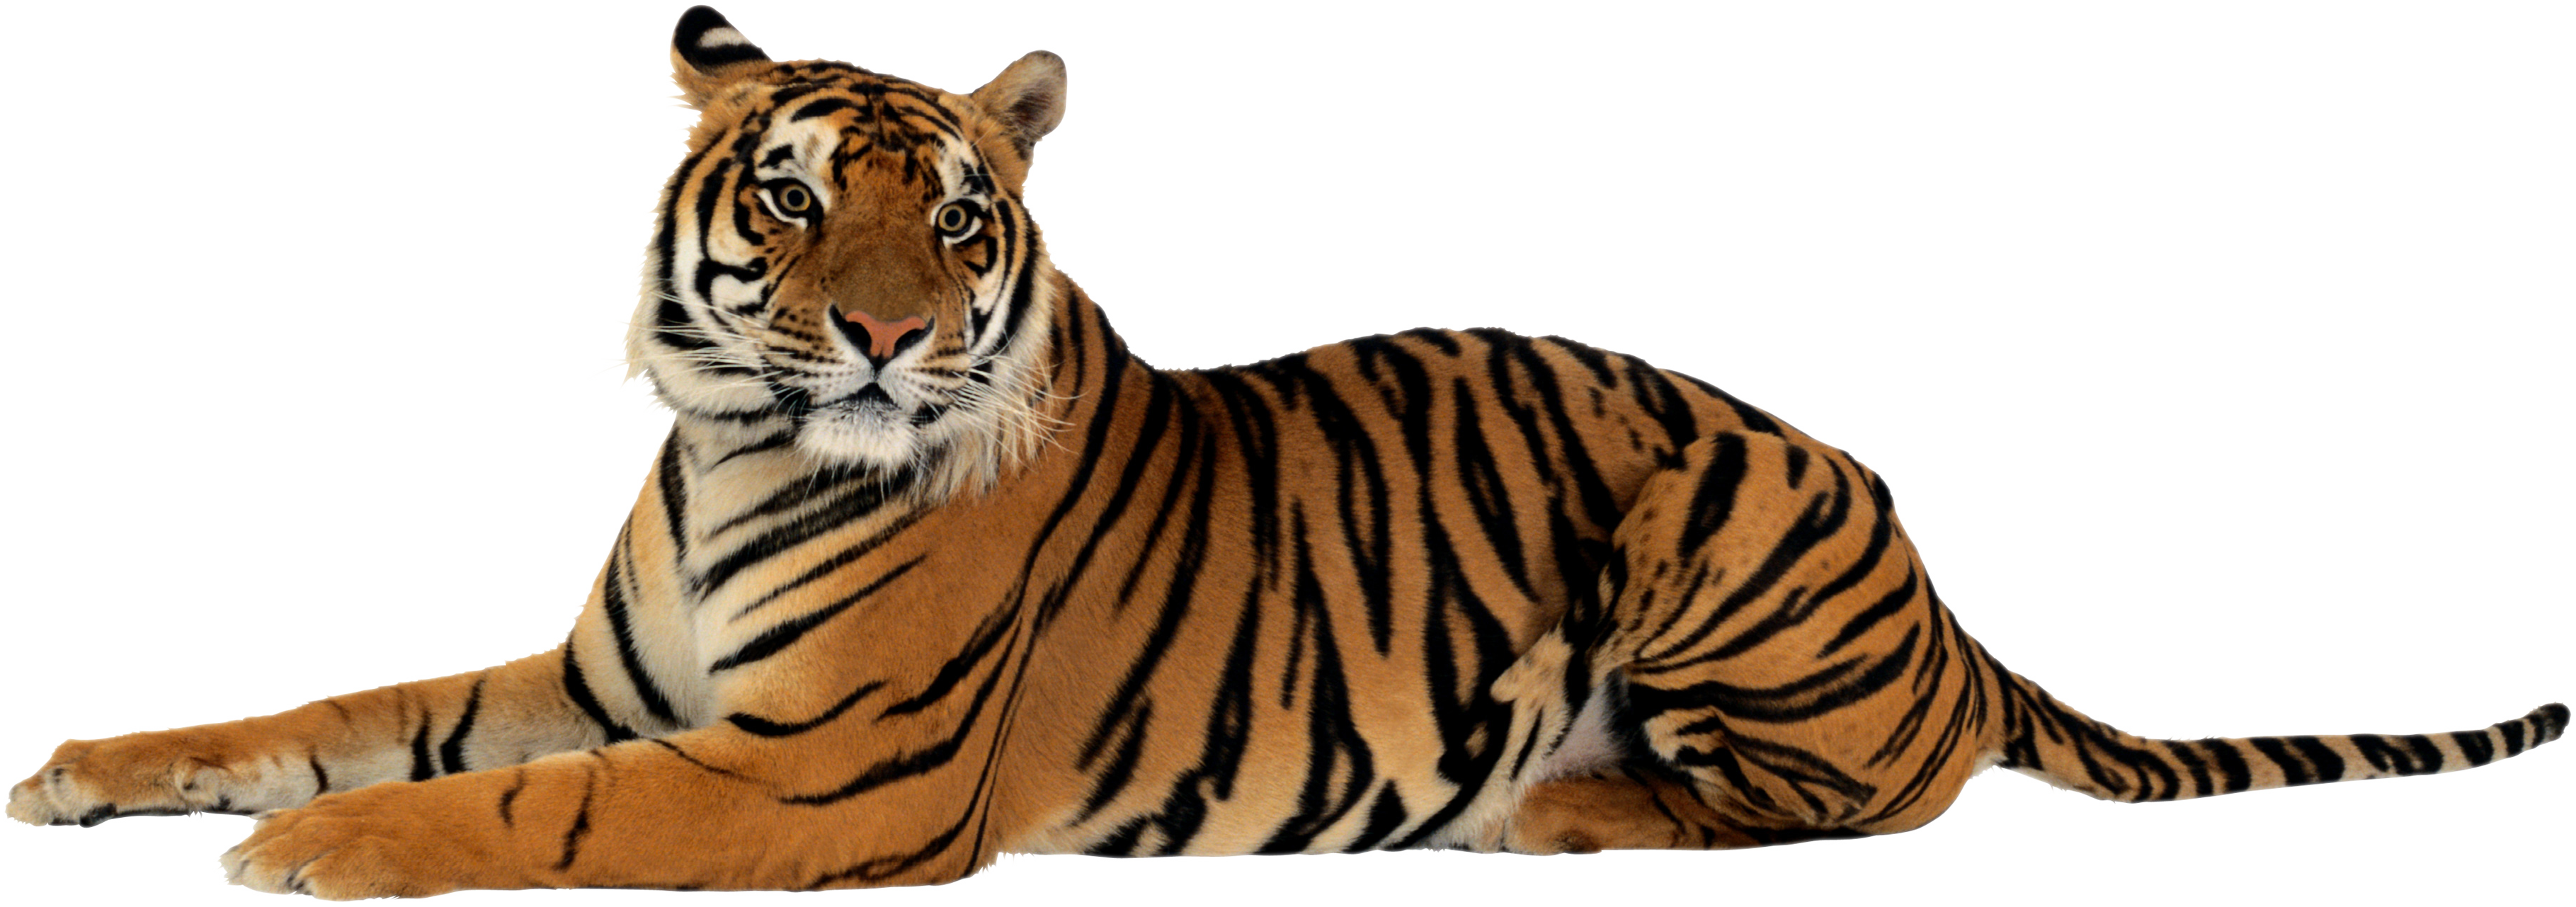 Tiger Png - Animal, Transparent background PNG HD thumbnail